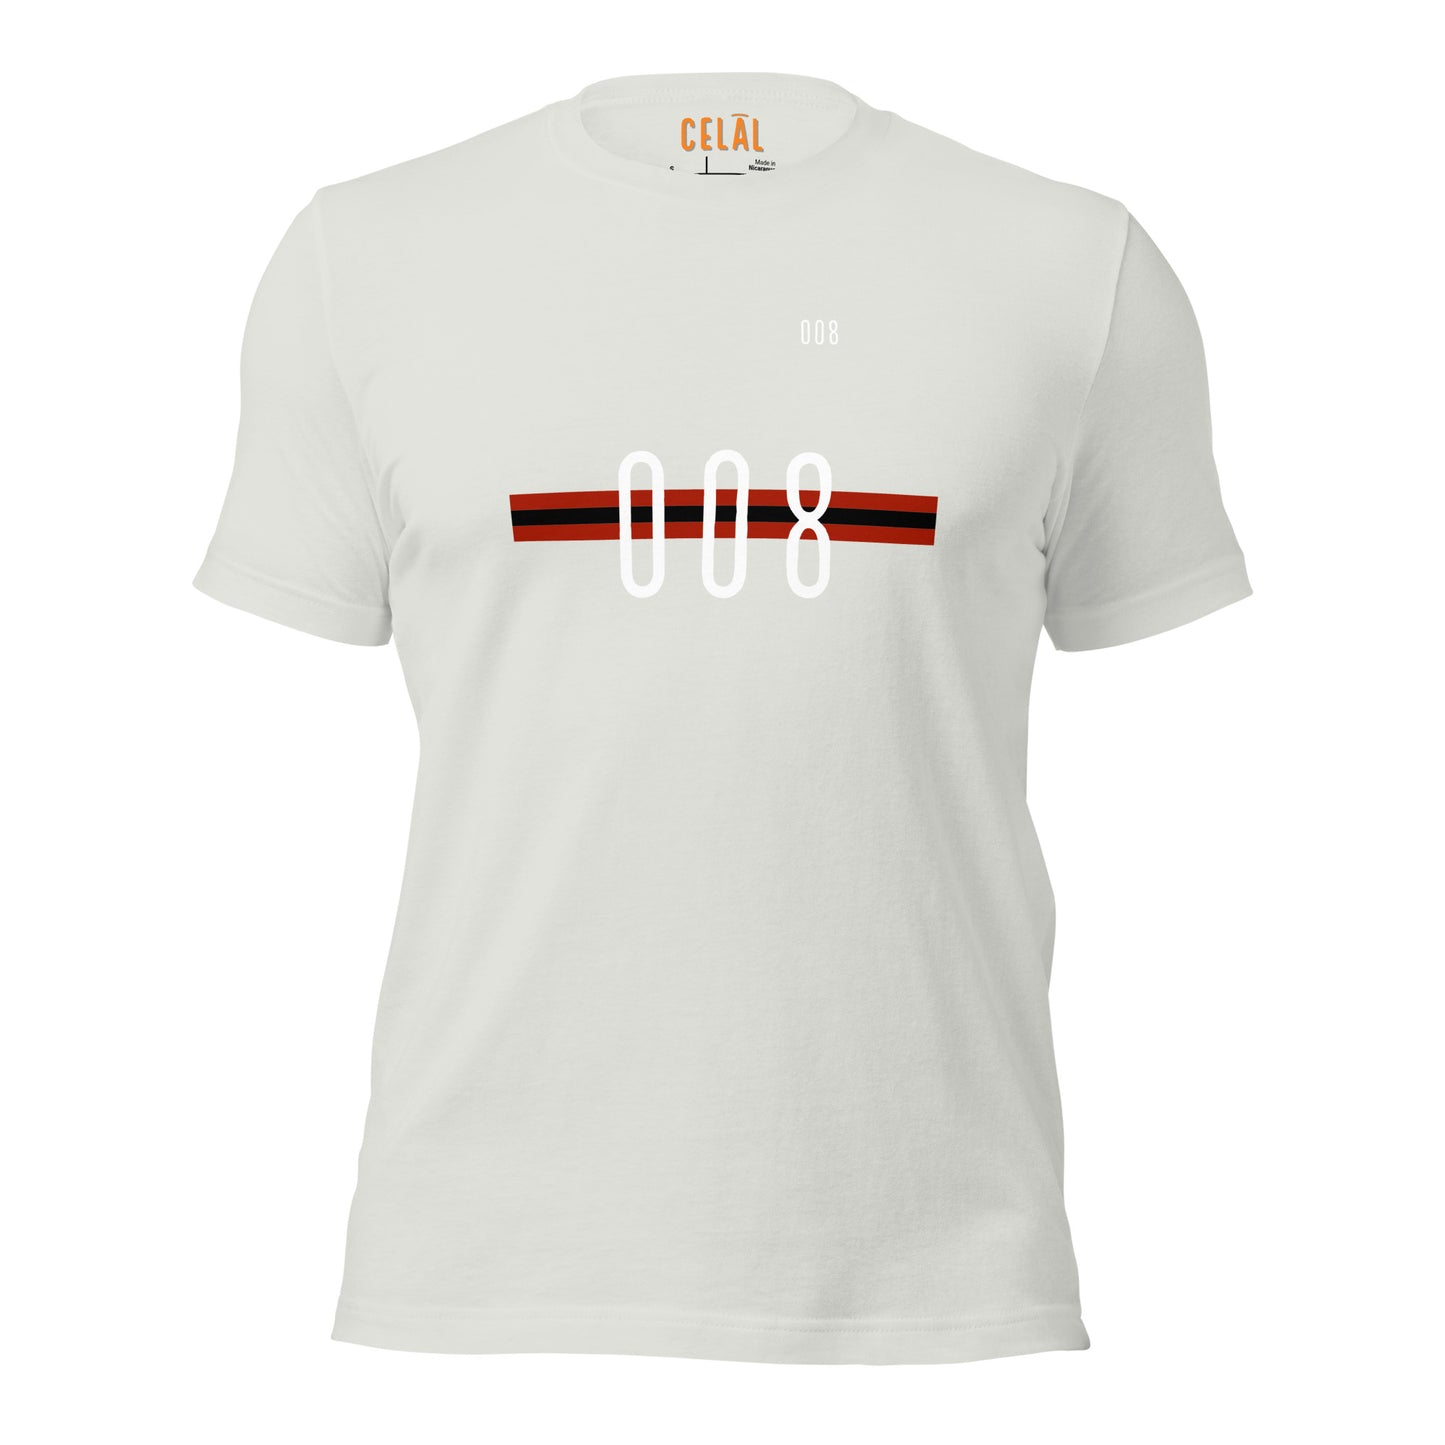 008 Unisex t-shirt